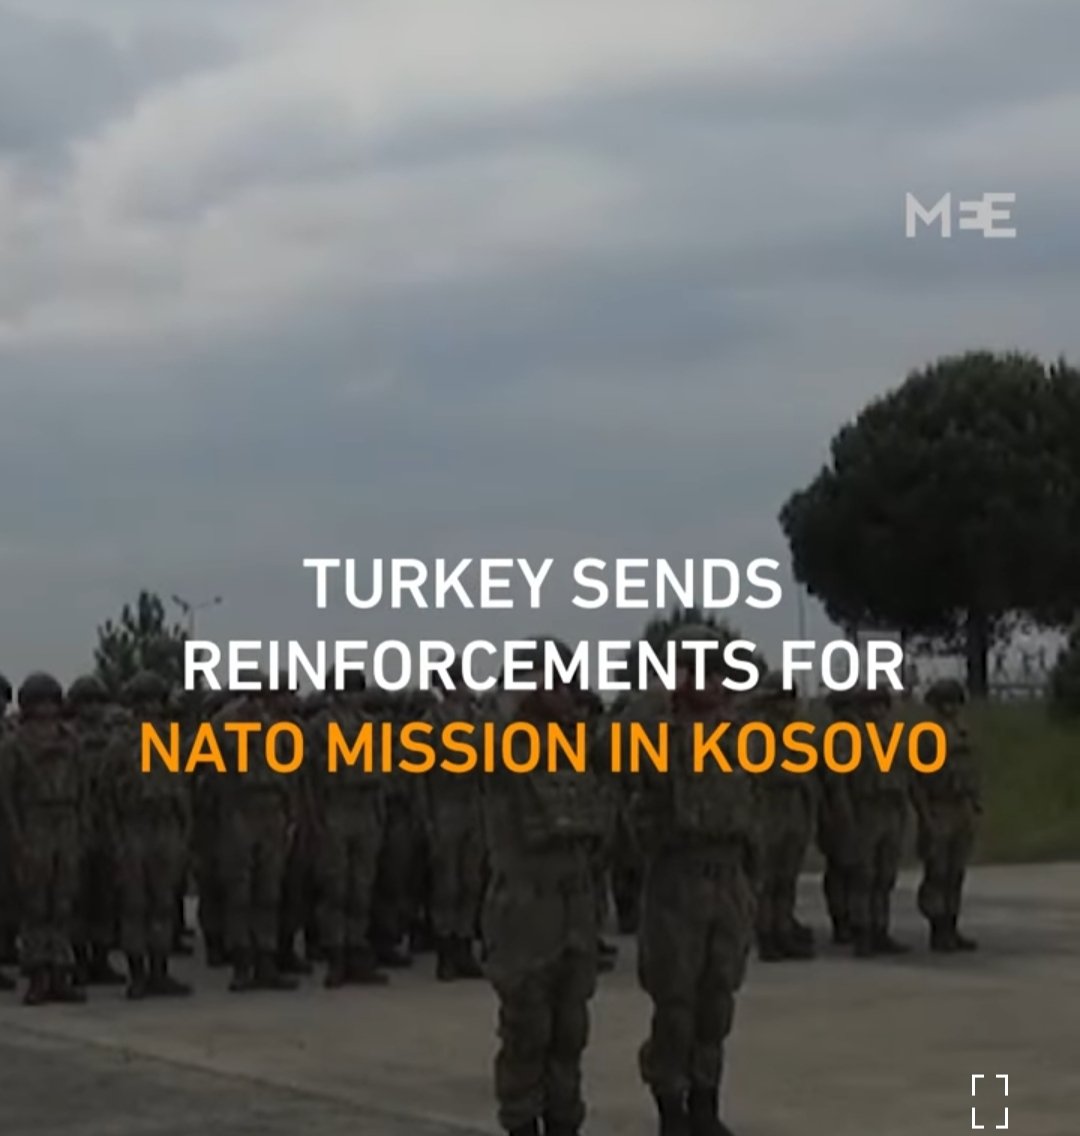 Turkey send peacekeeper troops to Kosovo